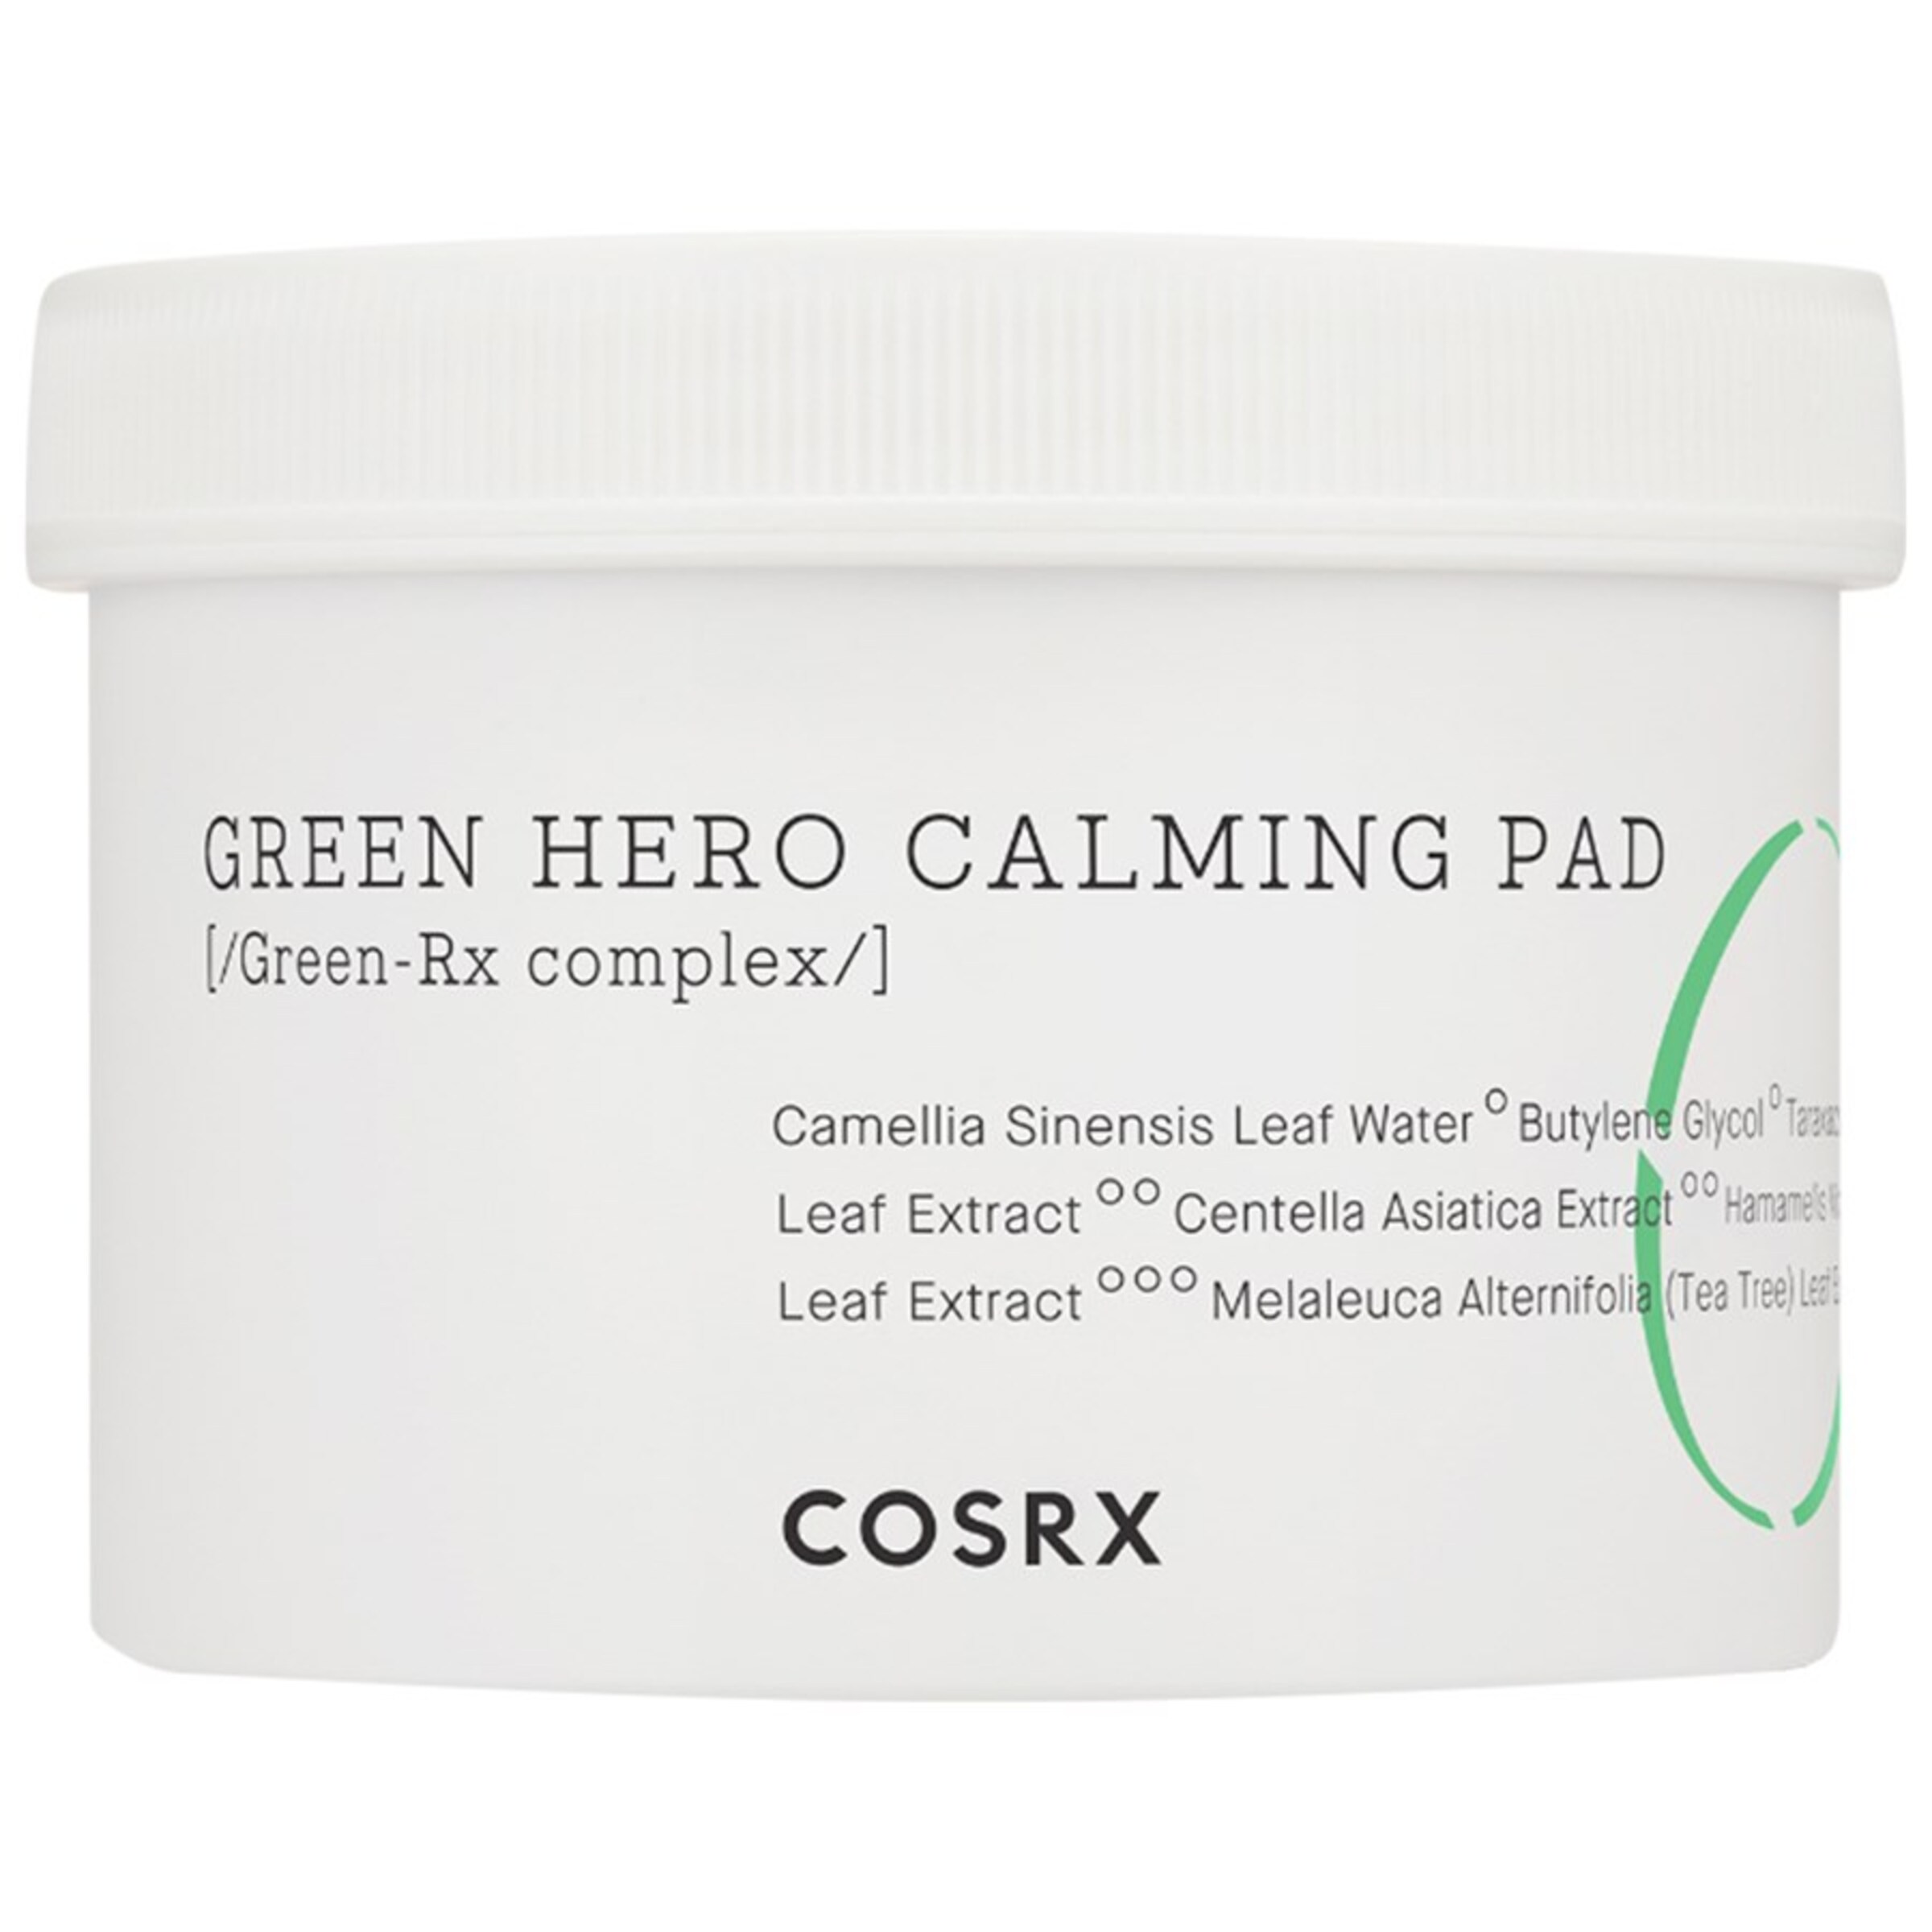 COSRX Maske Green Hero Calming Pad in 